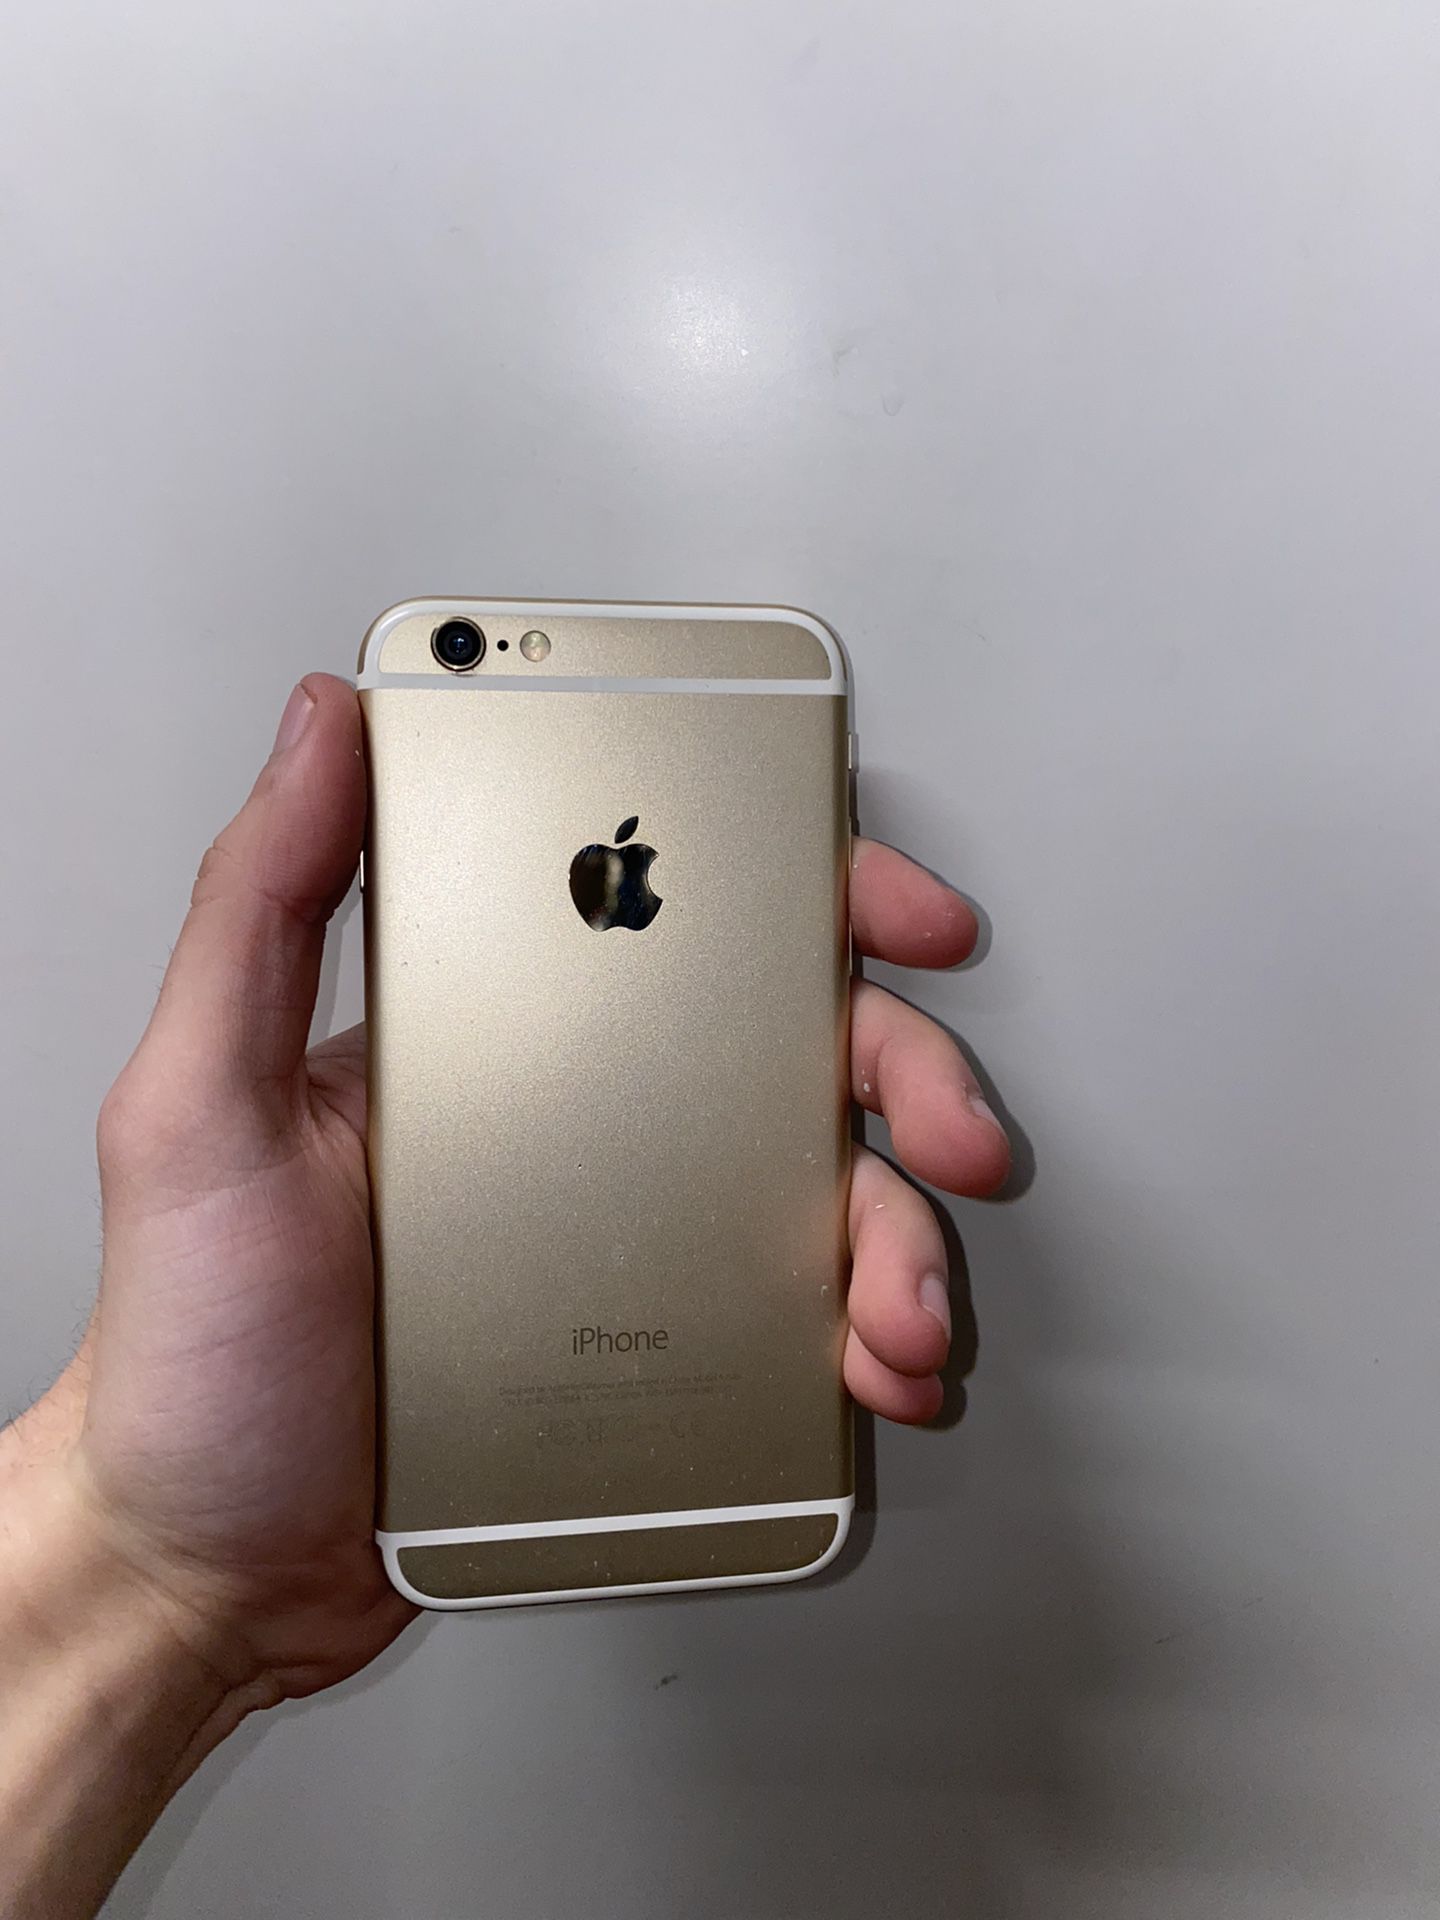 Apple iPhone 6 16 GB Unlocked